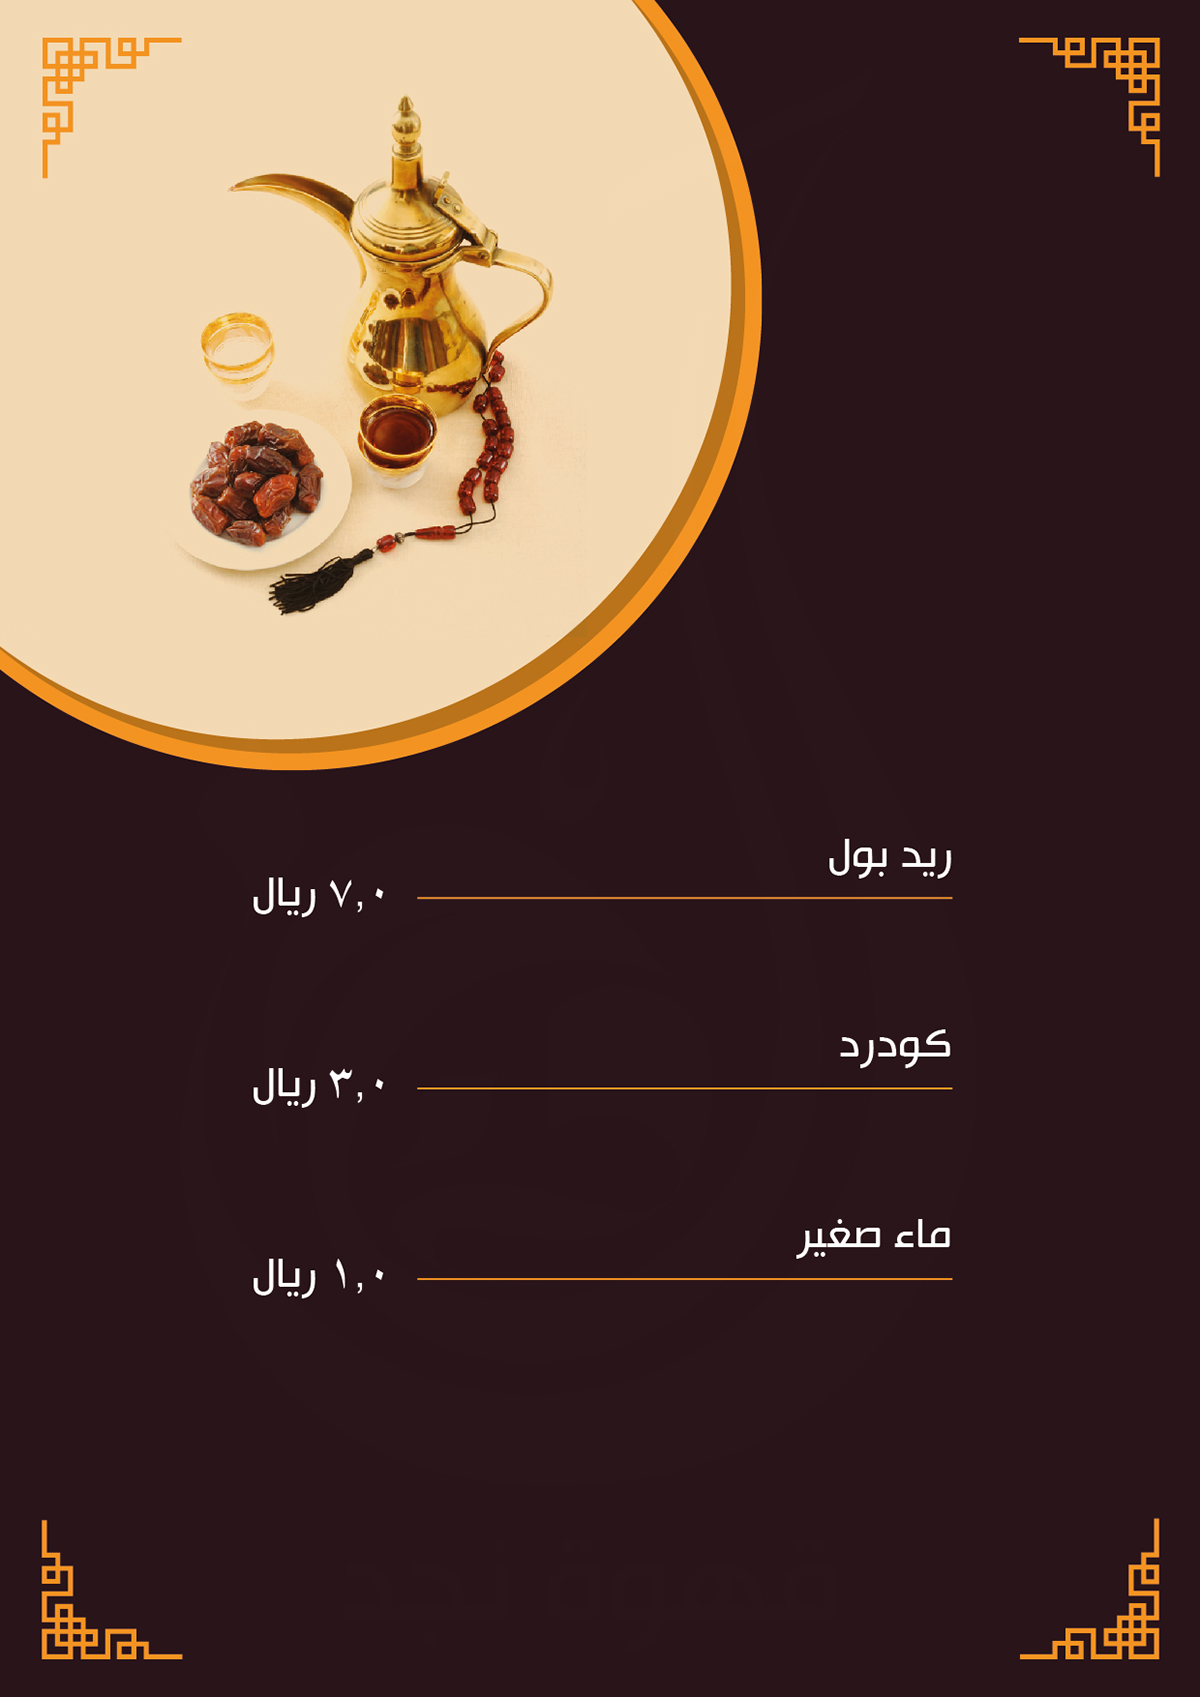 logo design arabic type name najd نجد cafe shop Saudi arabia brown yellow arabian Style